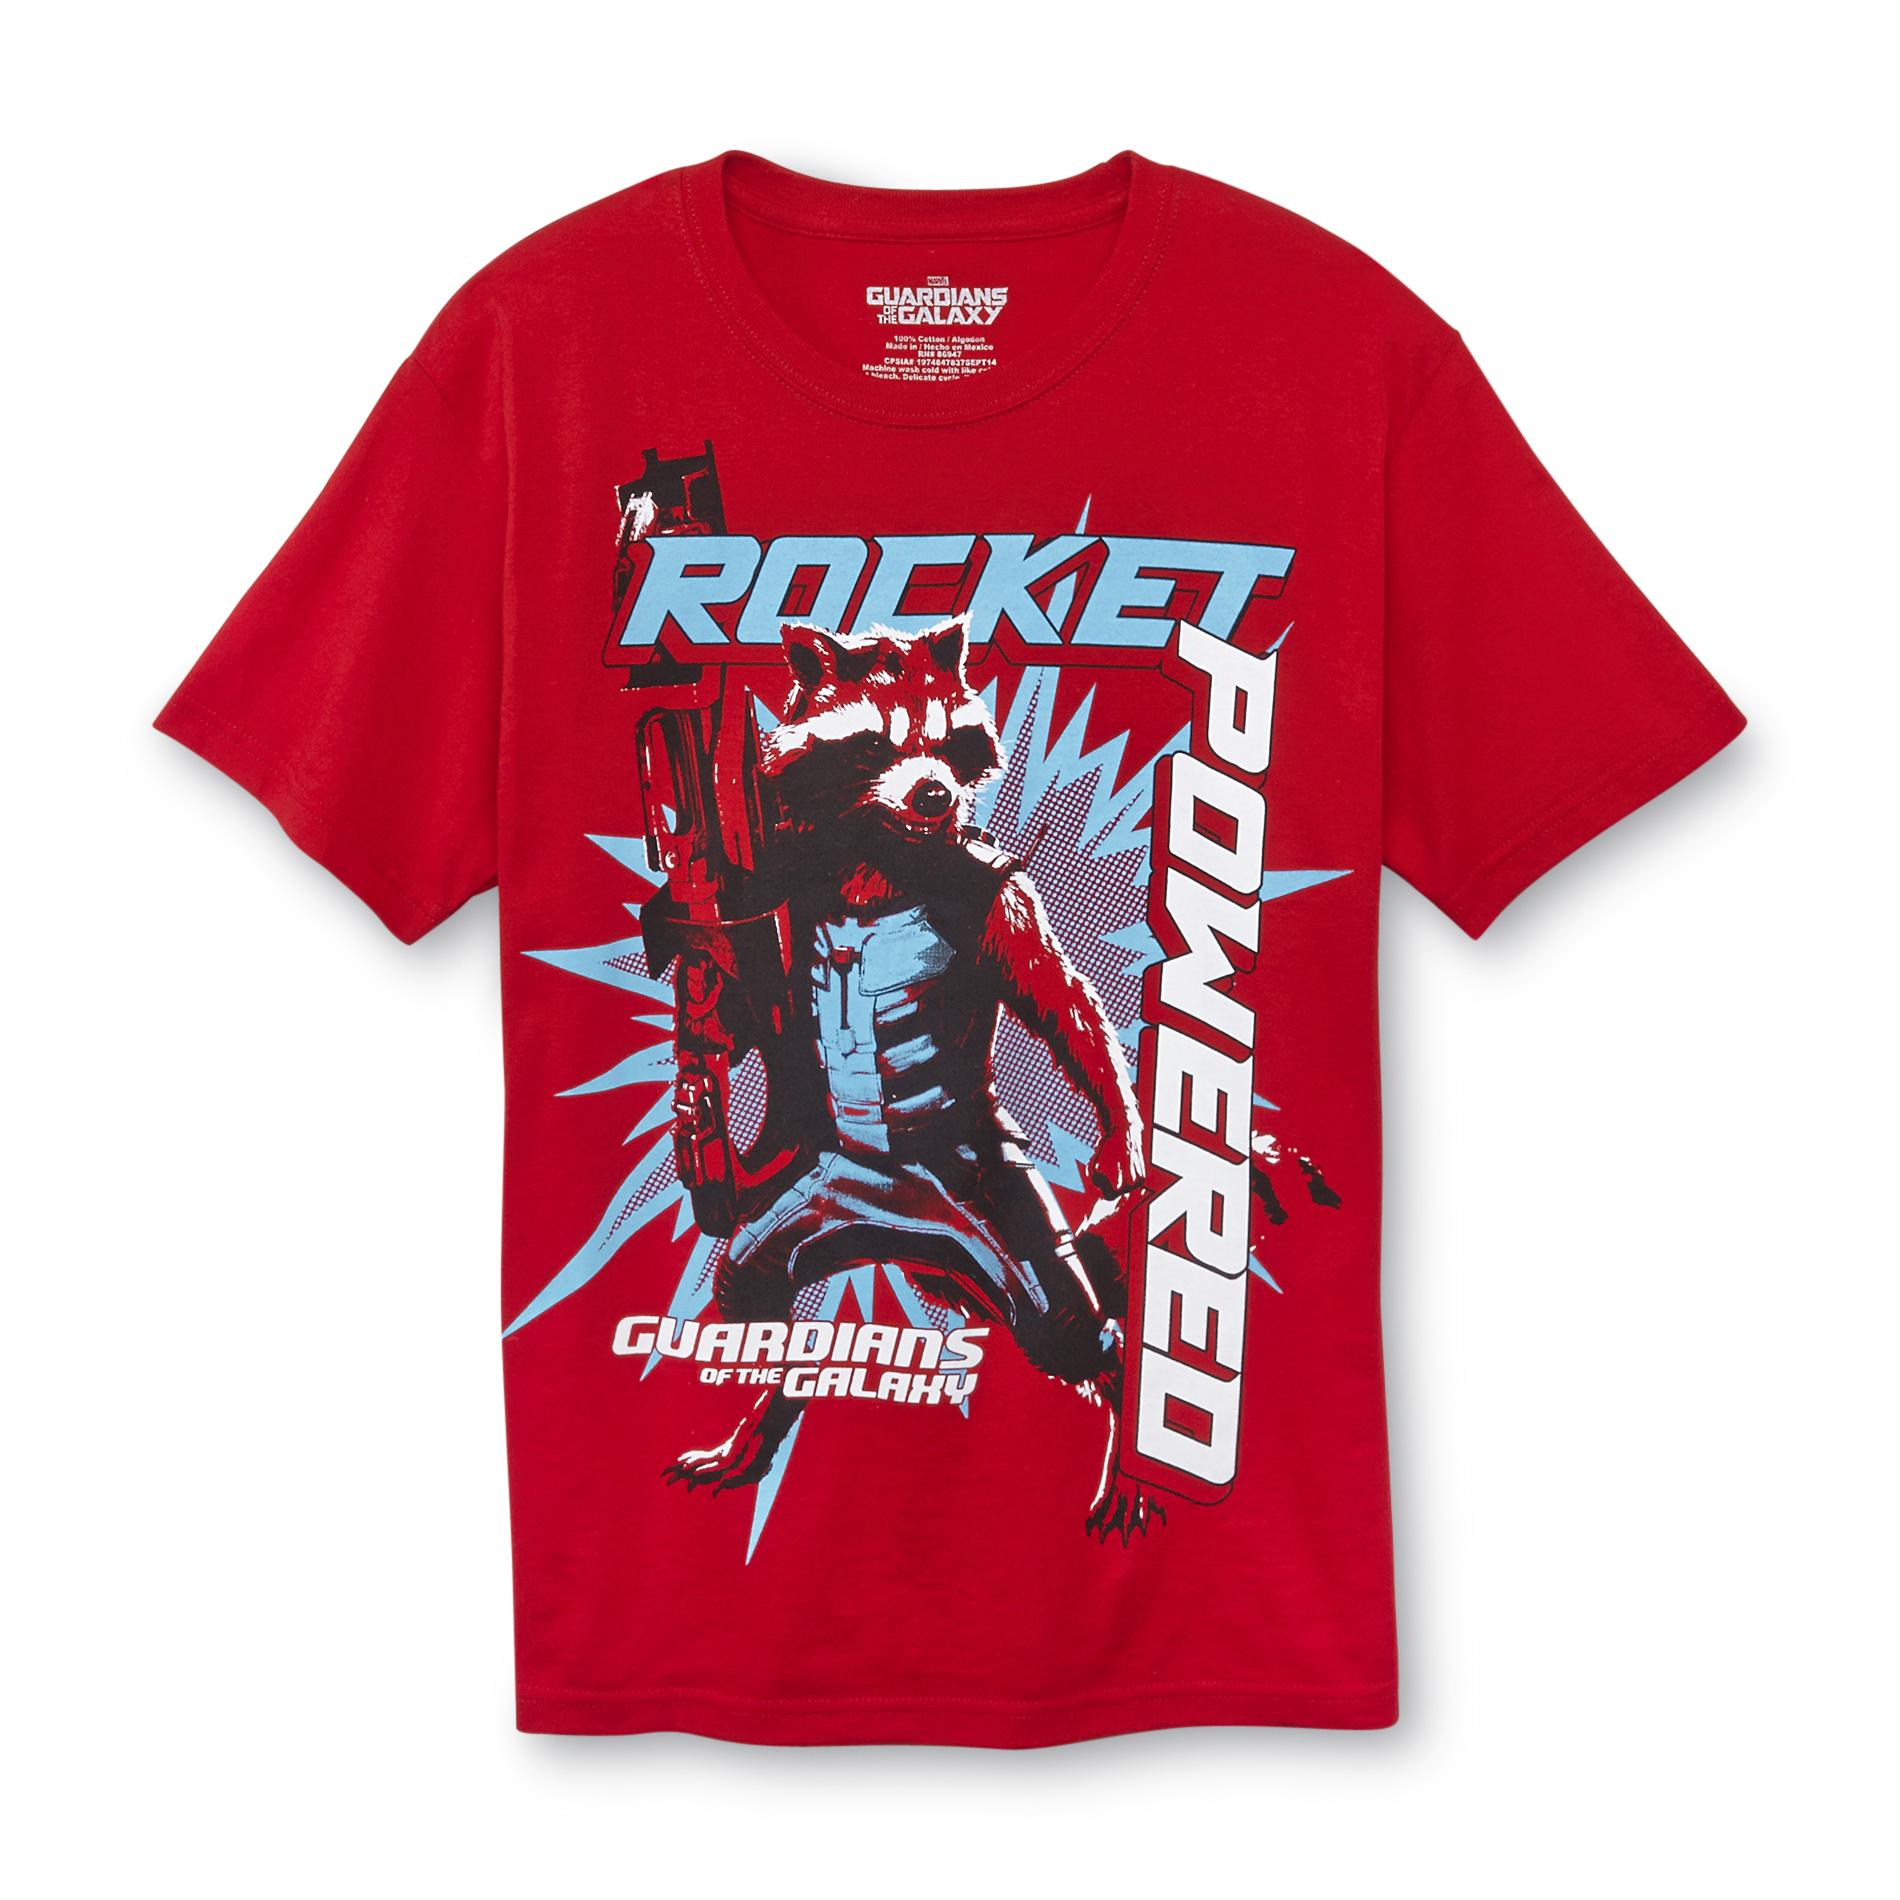 Marvel Boy's Rocket Raccoon Graphic T-Shirt